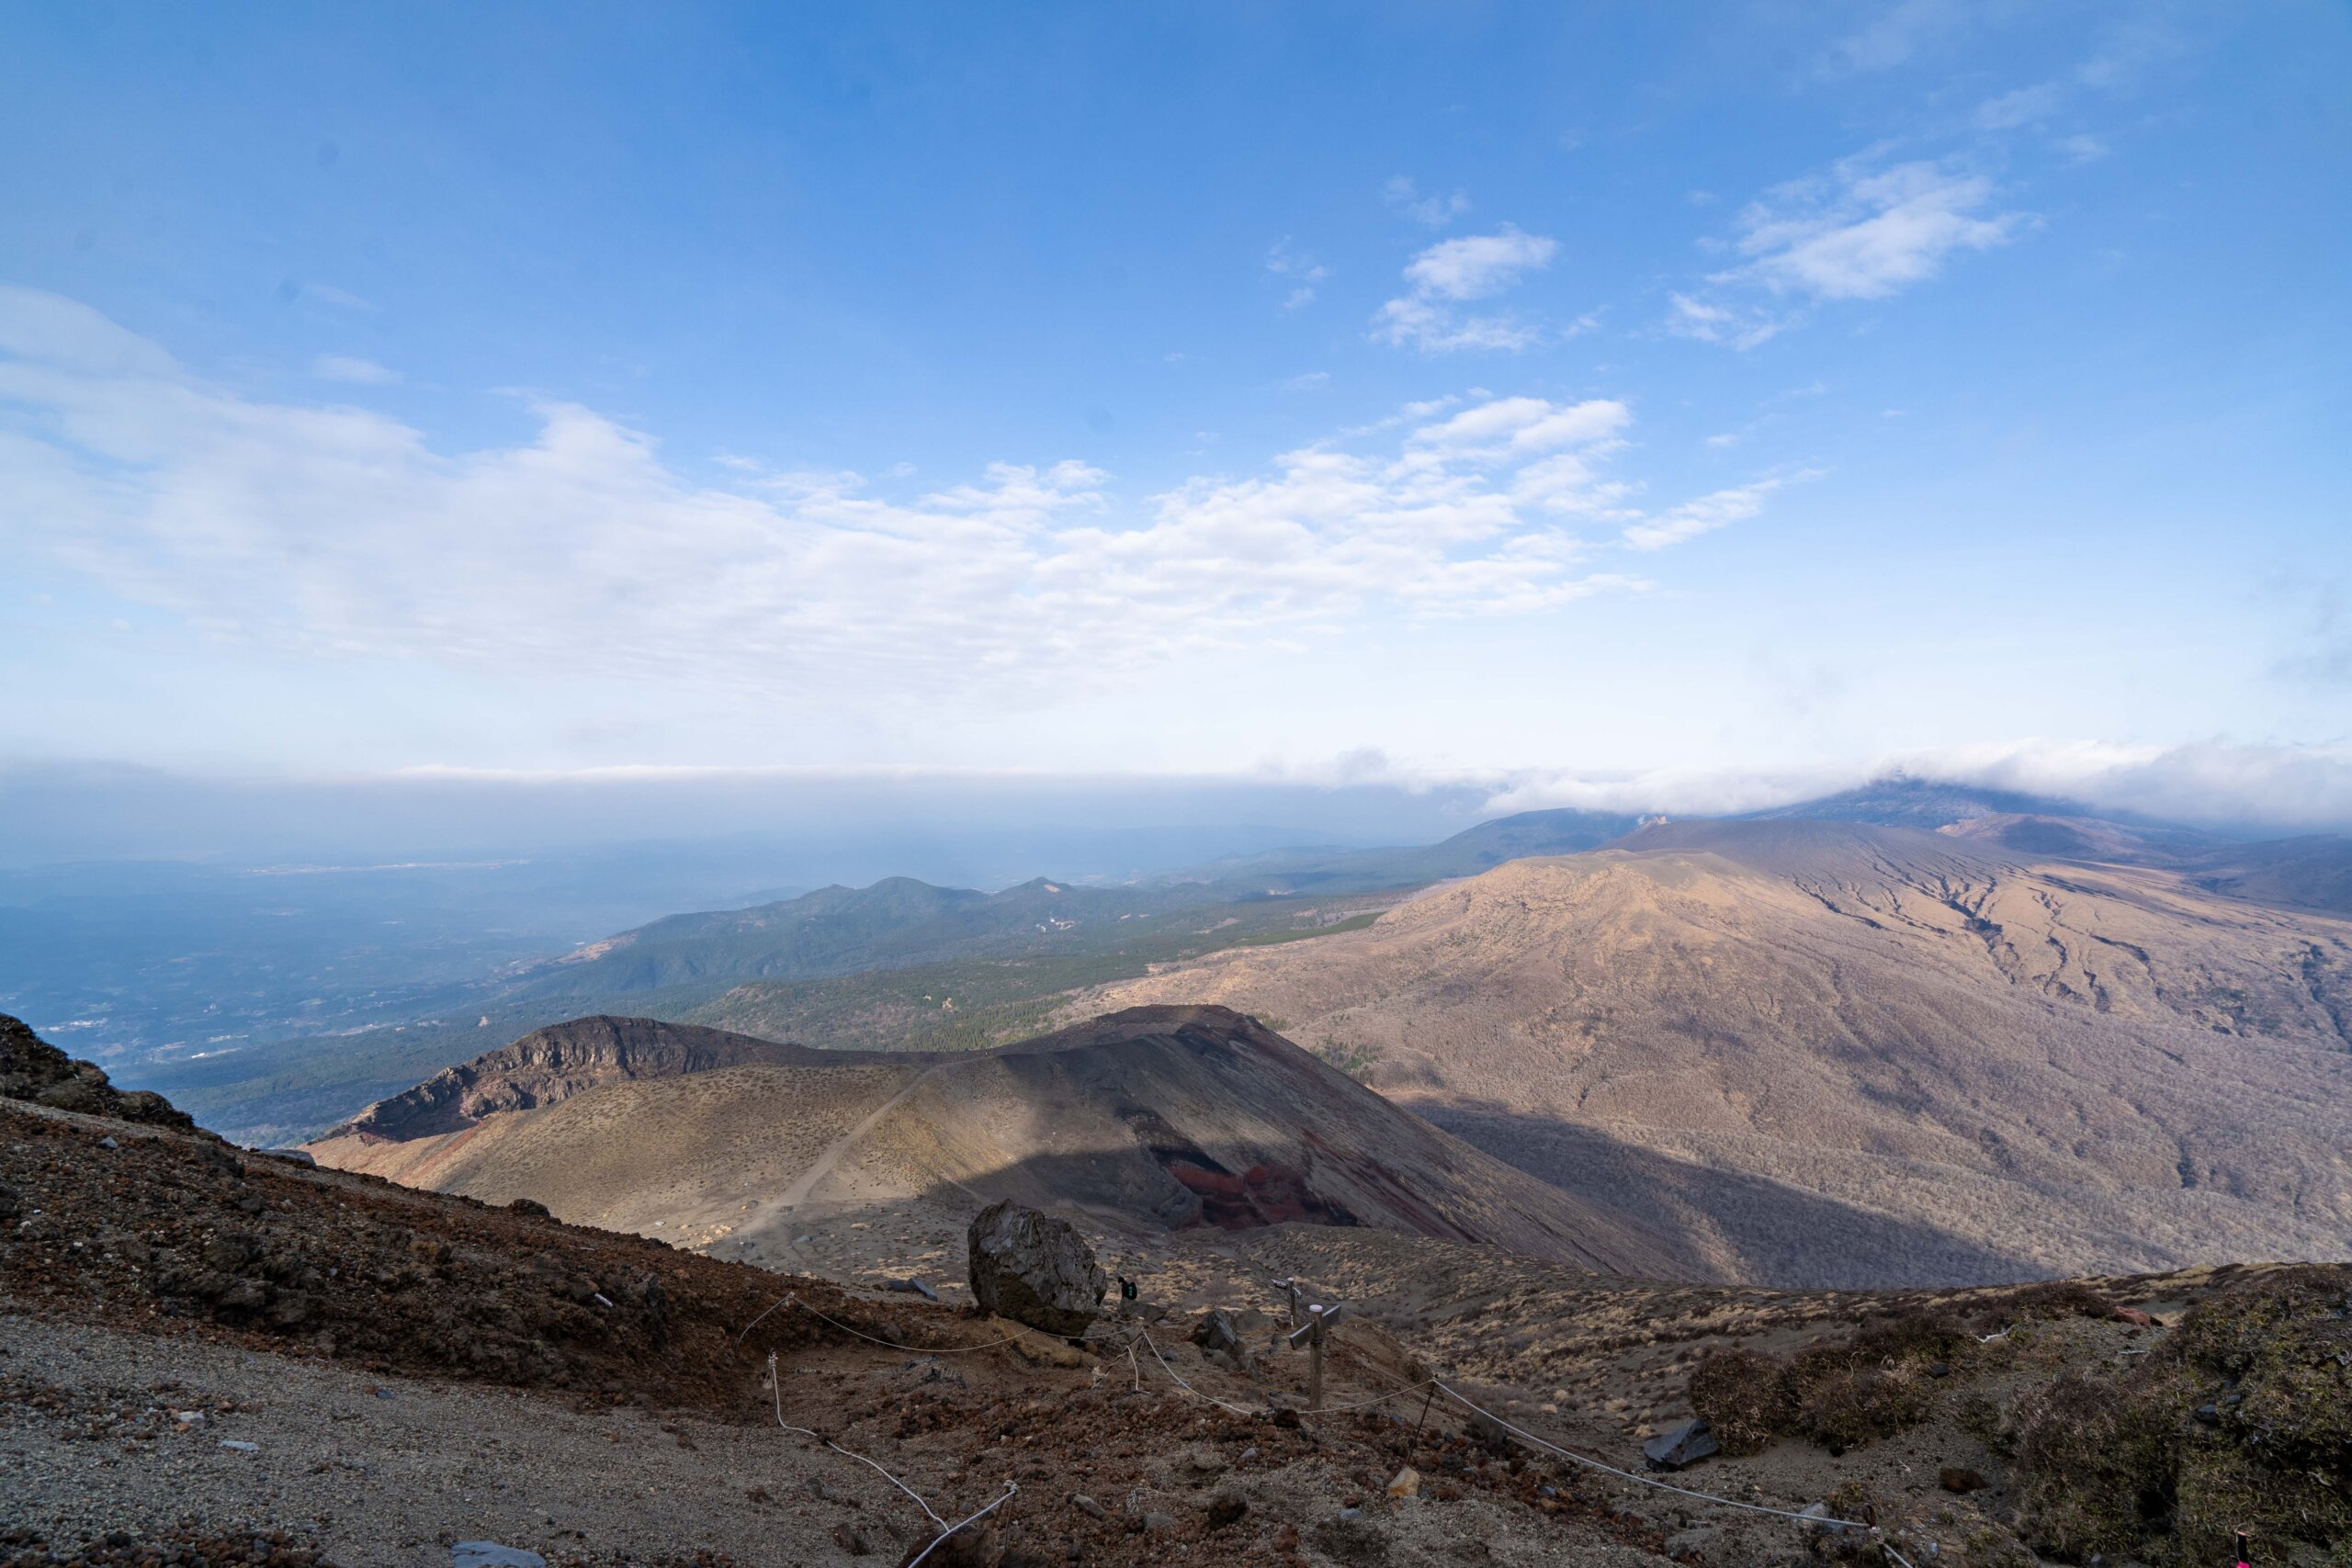 DSC06004 2 scaled - 【宮崎・鹿児島】高千穂峰の登山コースの難易度と魅力とその伝説について